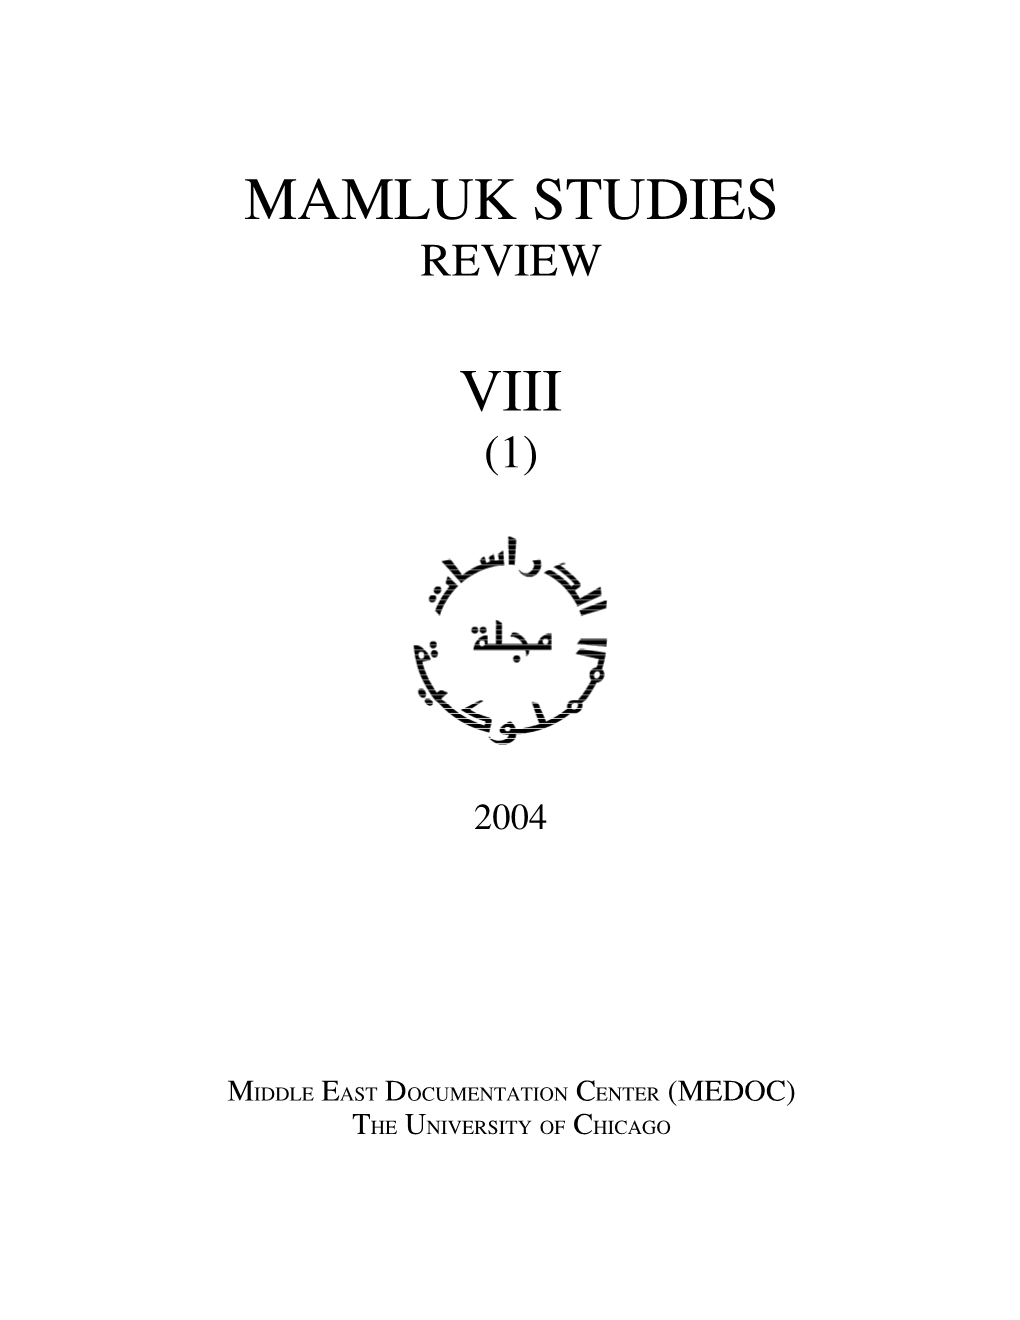 Mamluk Studies Review Vol. VIII, No. 1 (2004)